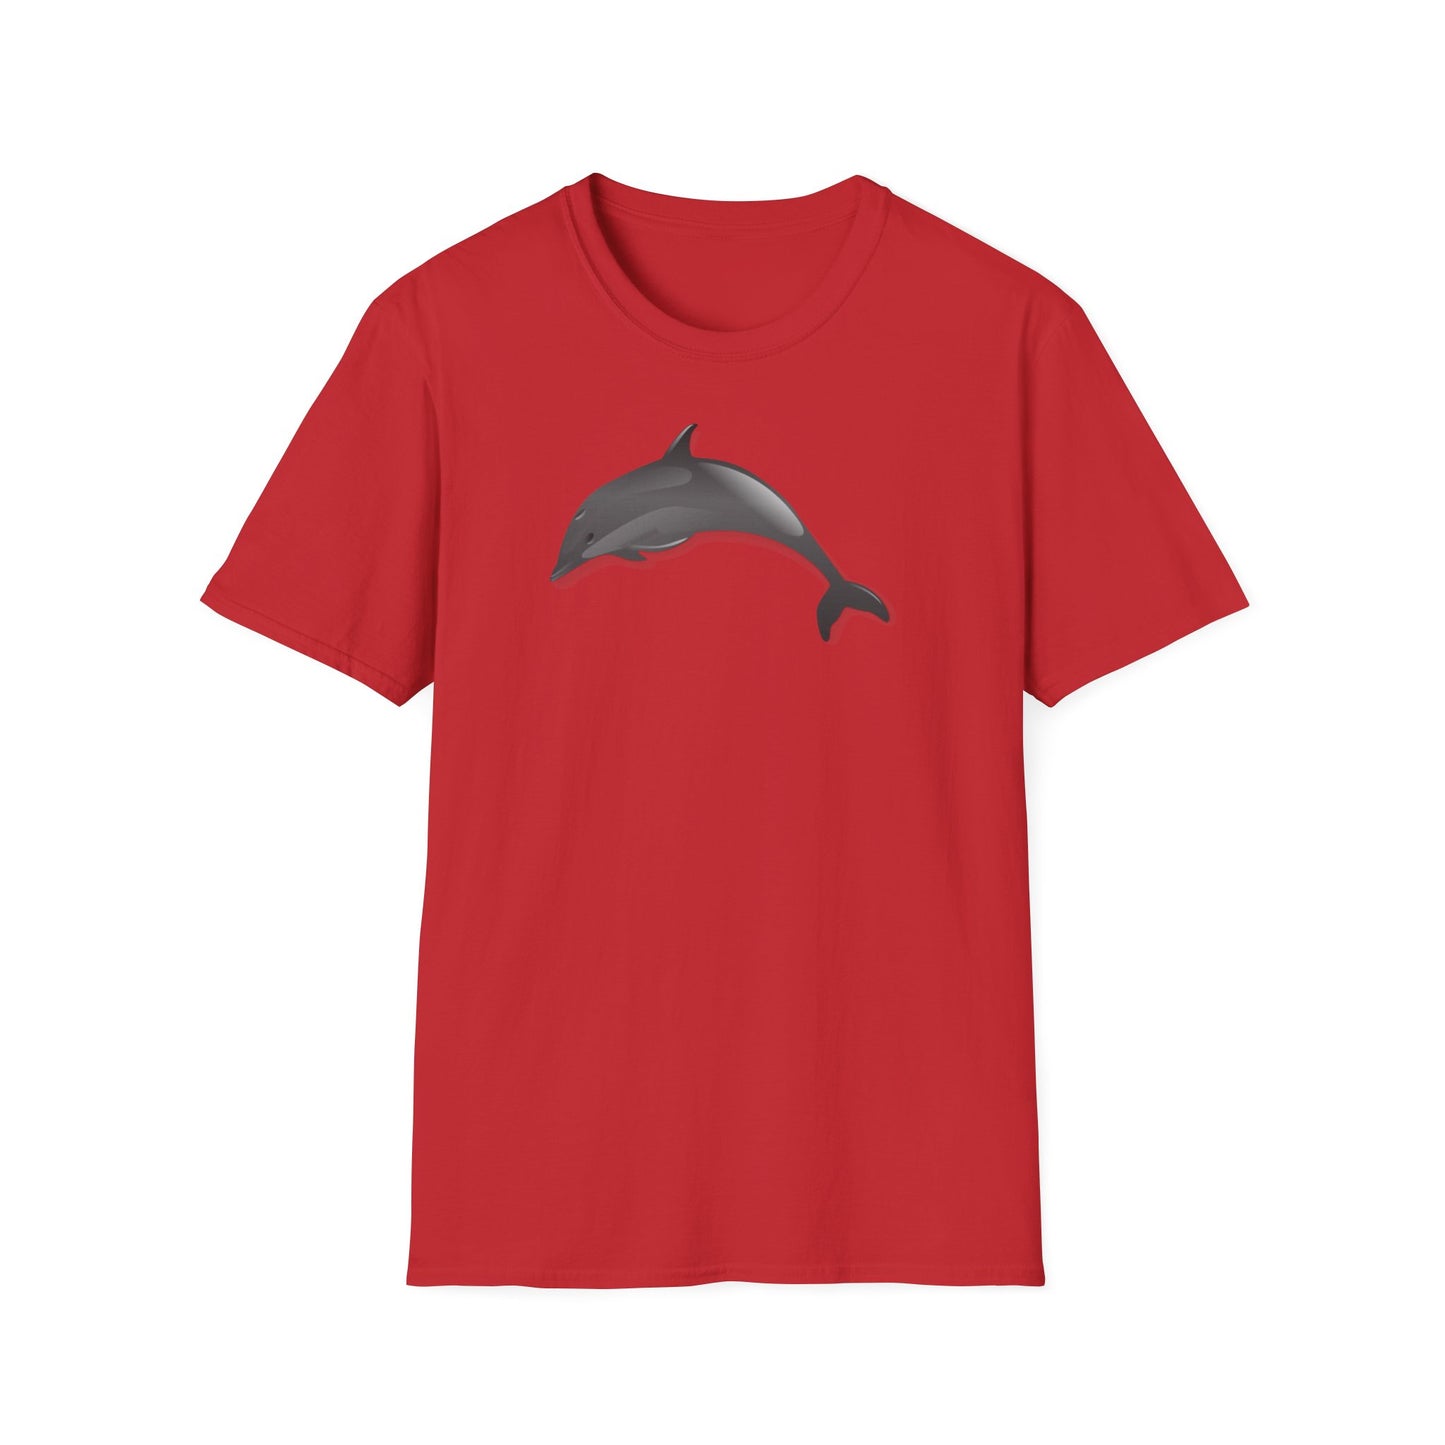 Grey Dolphin T-Shirt